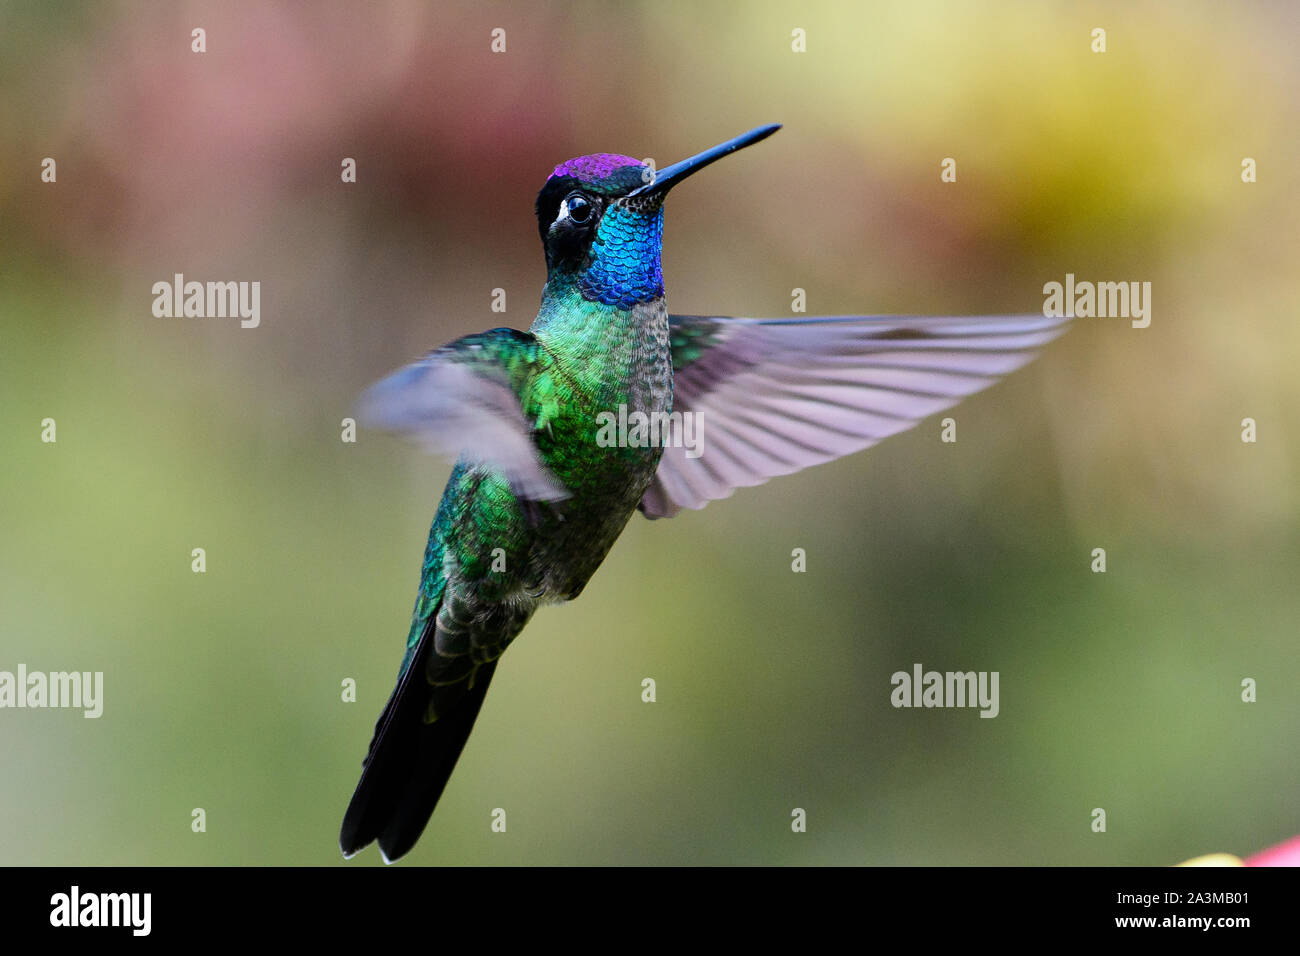 Magnificent hummingbird in flight Stock Photo